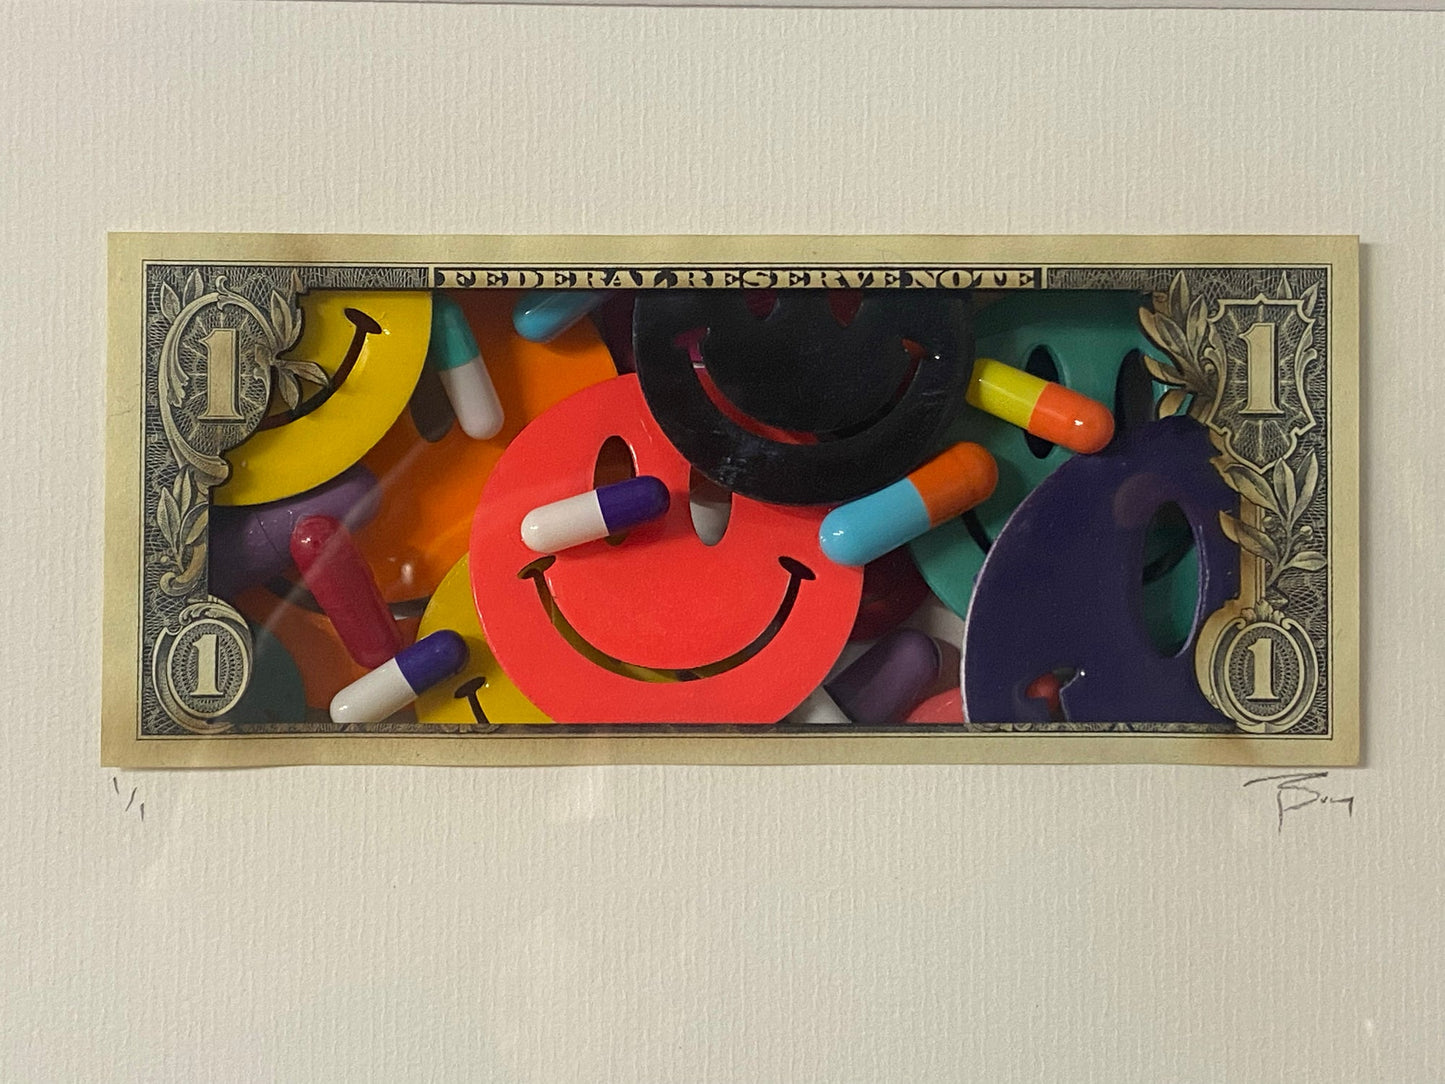 One dollar note, pills and thrills #2 edition - Smolensky Gallery